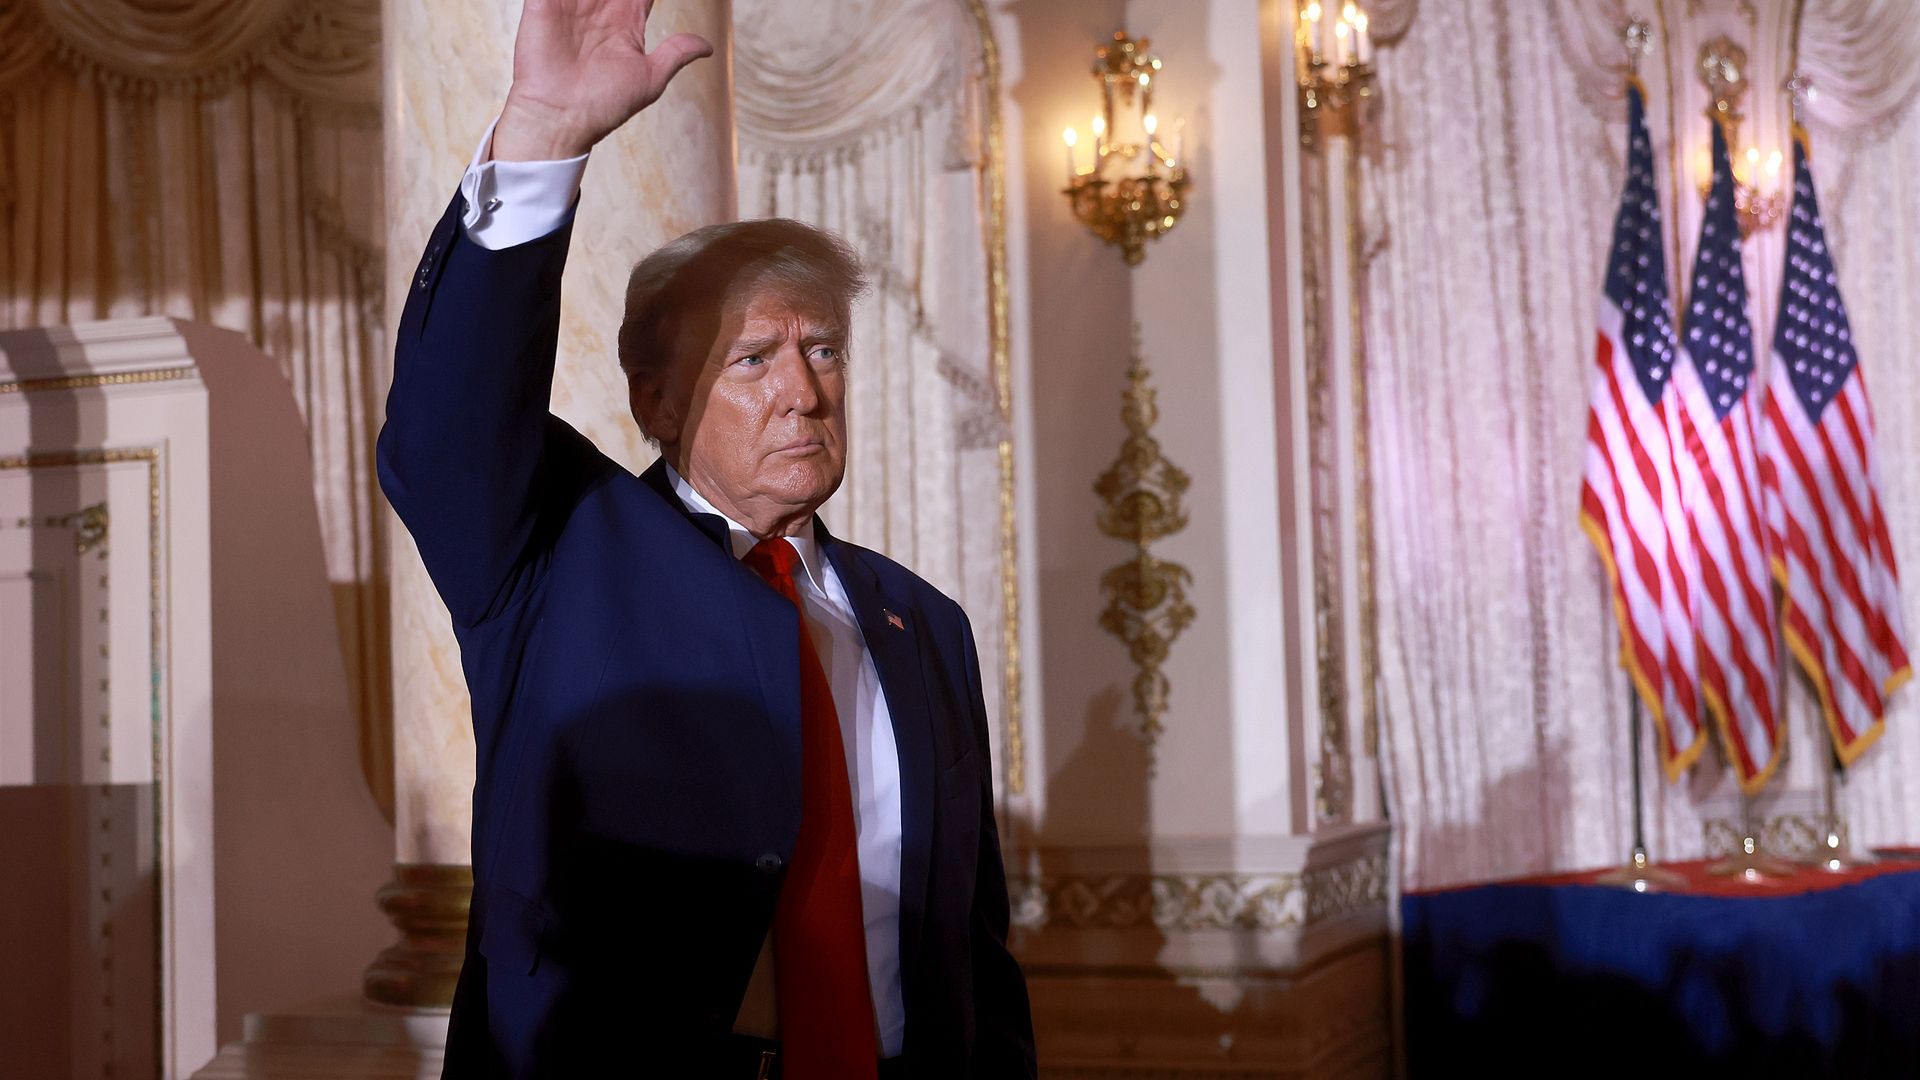 Photo of Donald Trump raising his hand